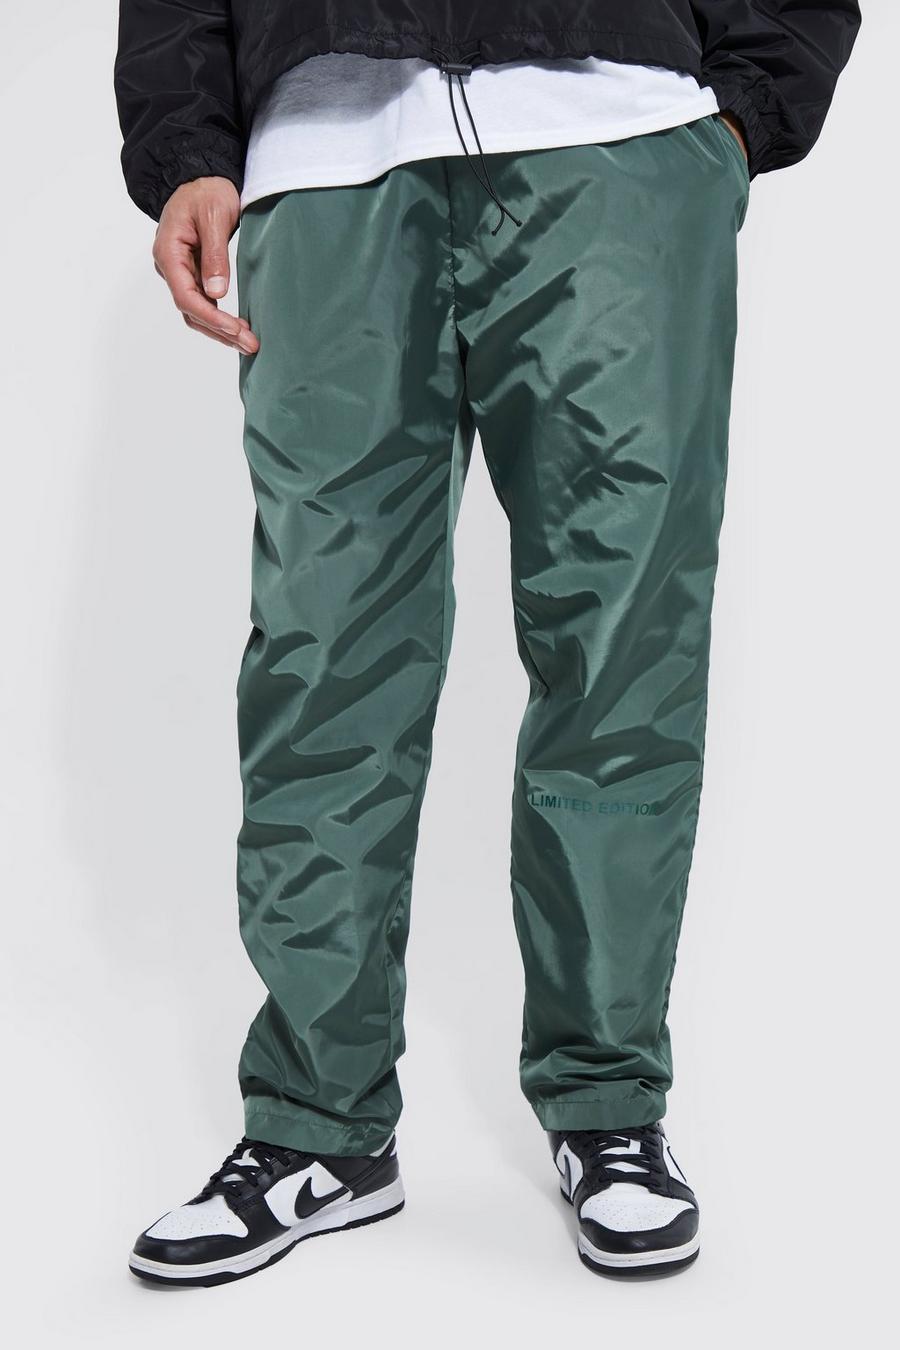 Pantaloni Tall Limited Edition con vita elasticizzata, Forest verde image number 1